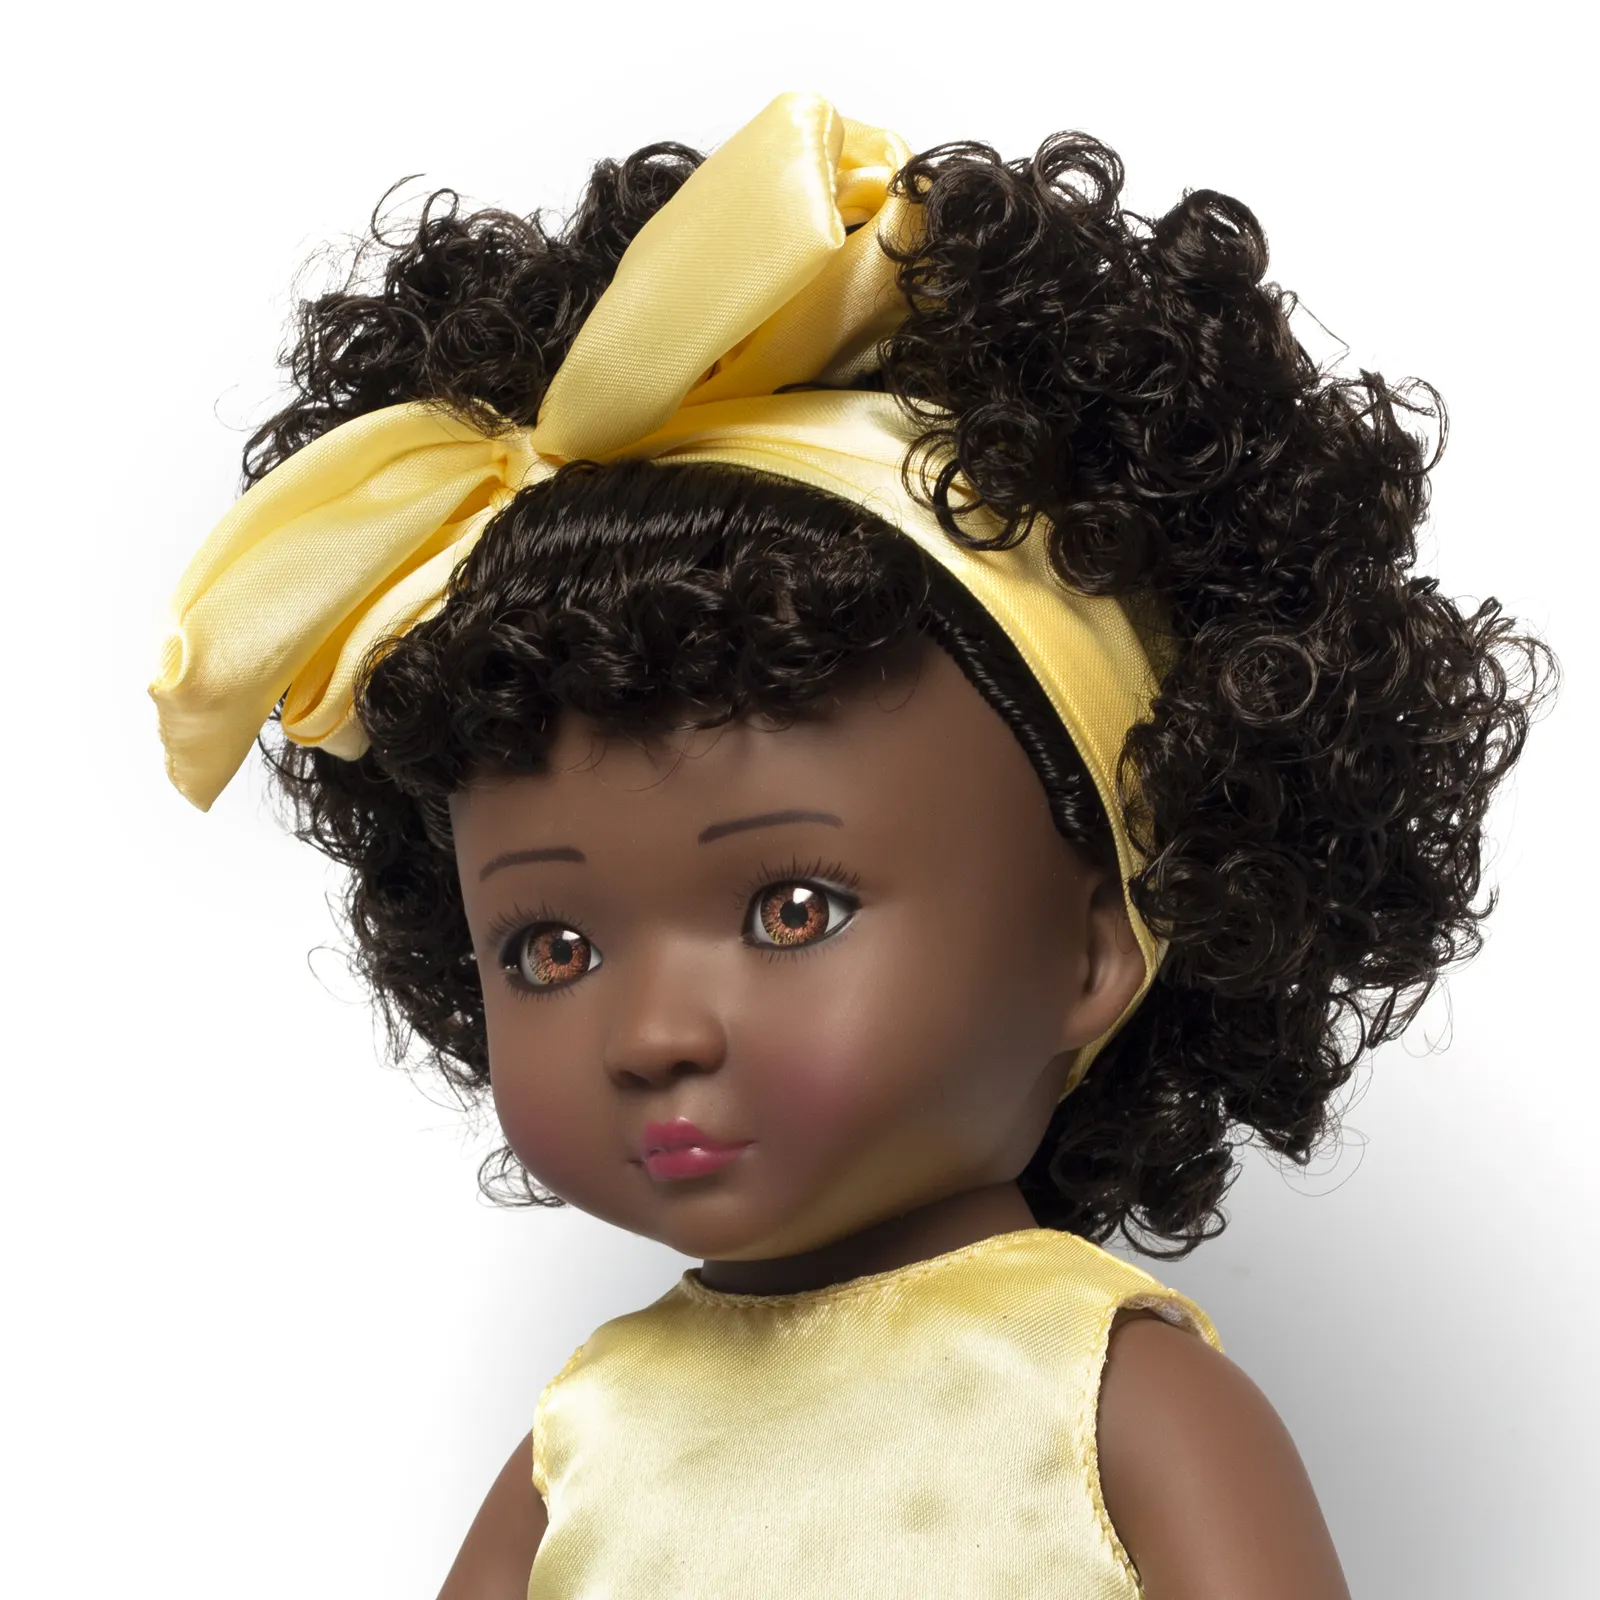 OEM manufacture custom black africa girl doll, real alive 18 inch reborn baby girls toys doll, dolls for kids